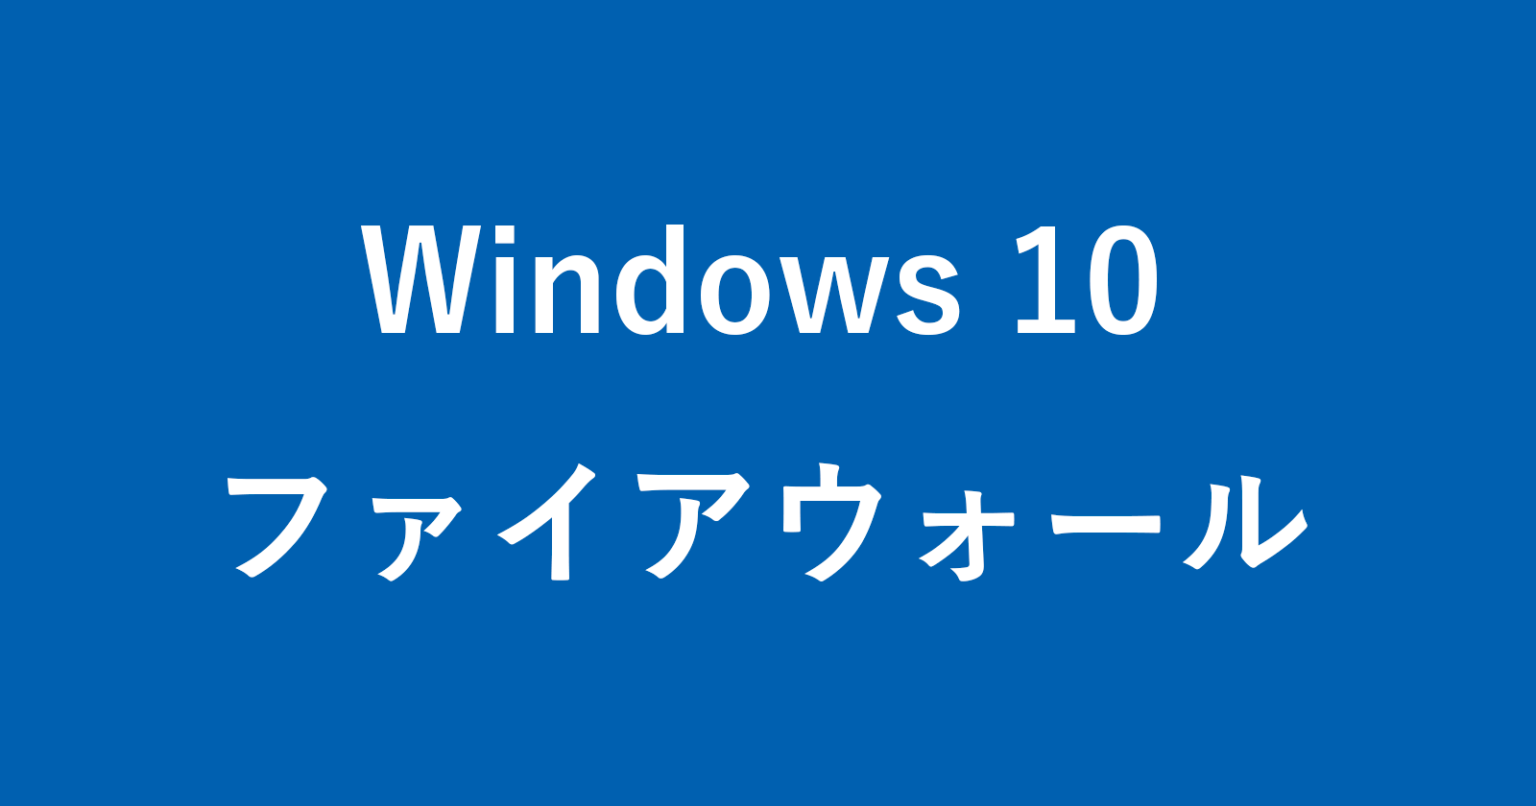 windows 10 firewall